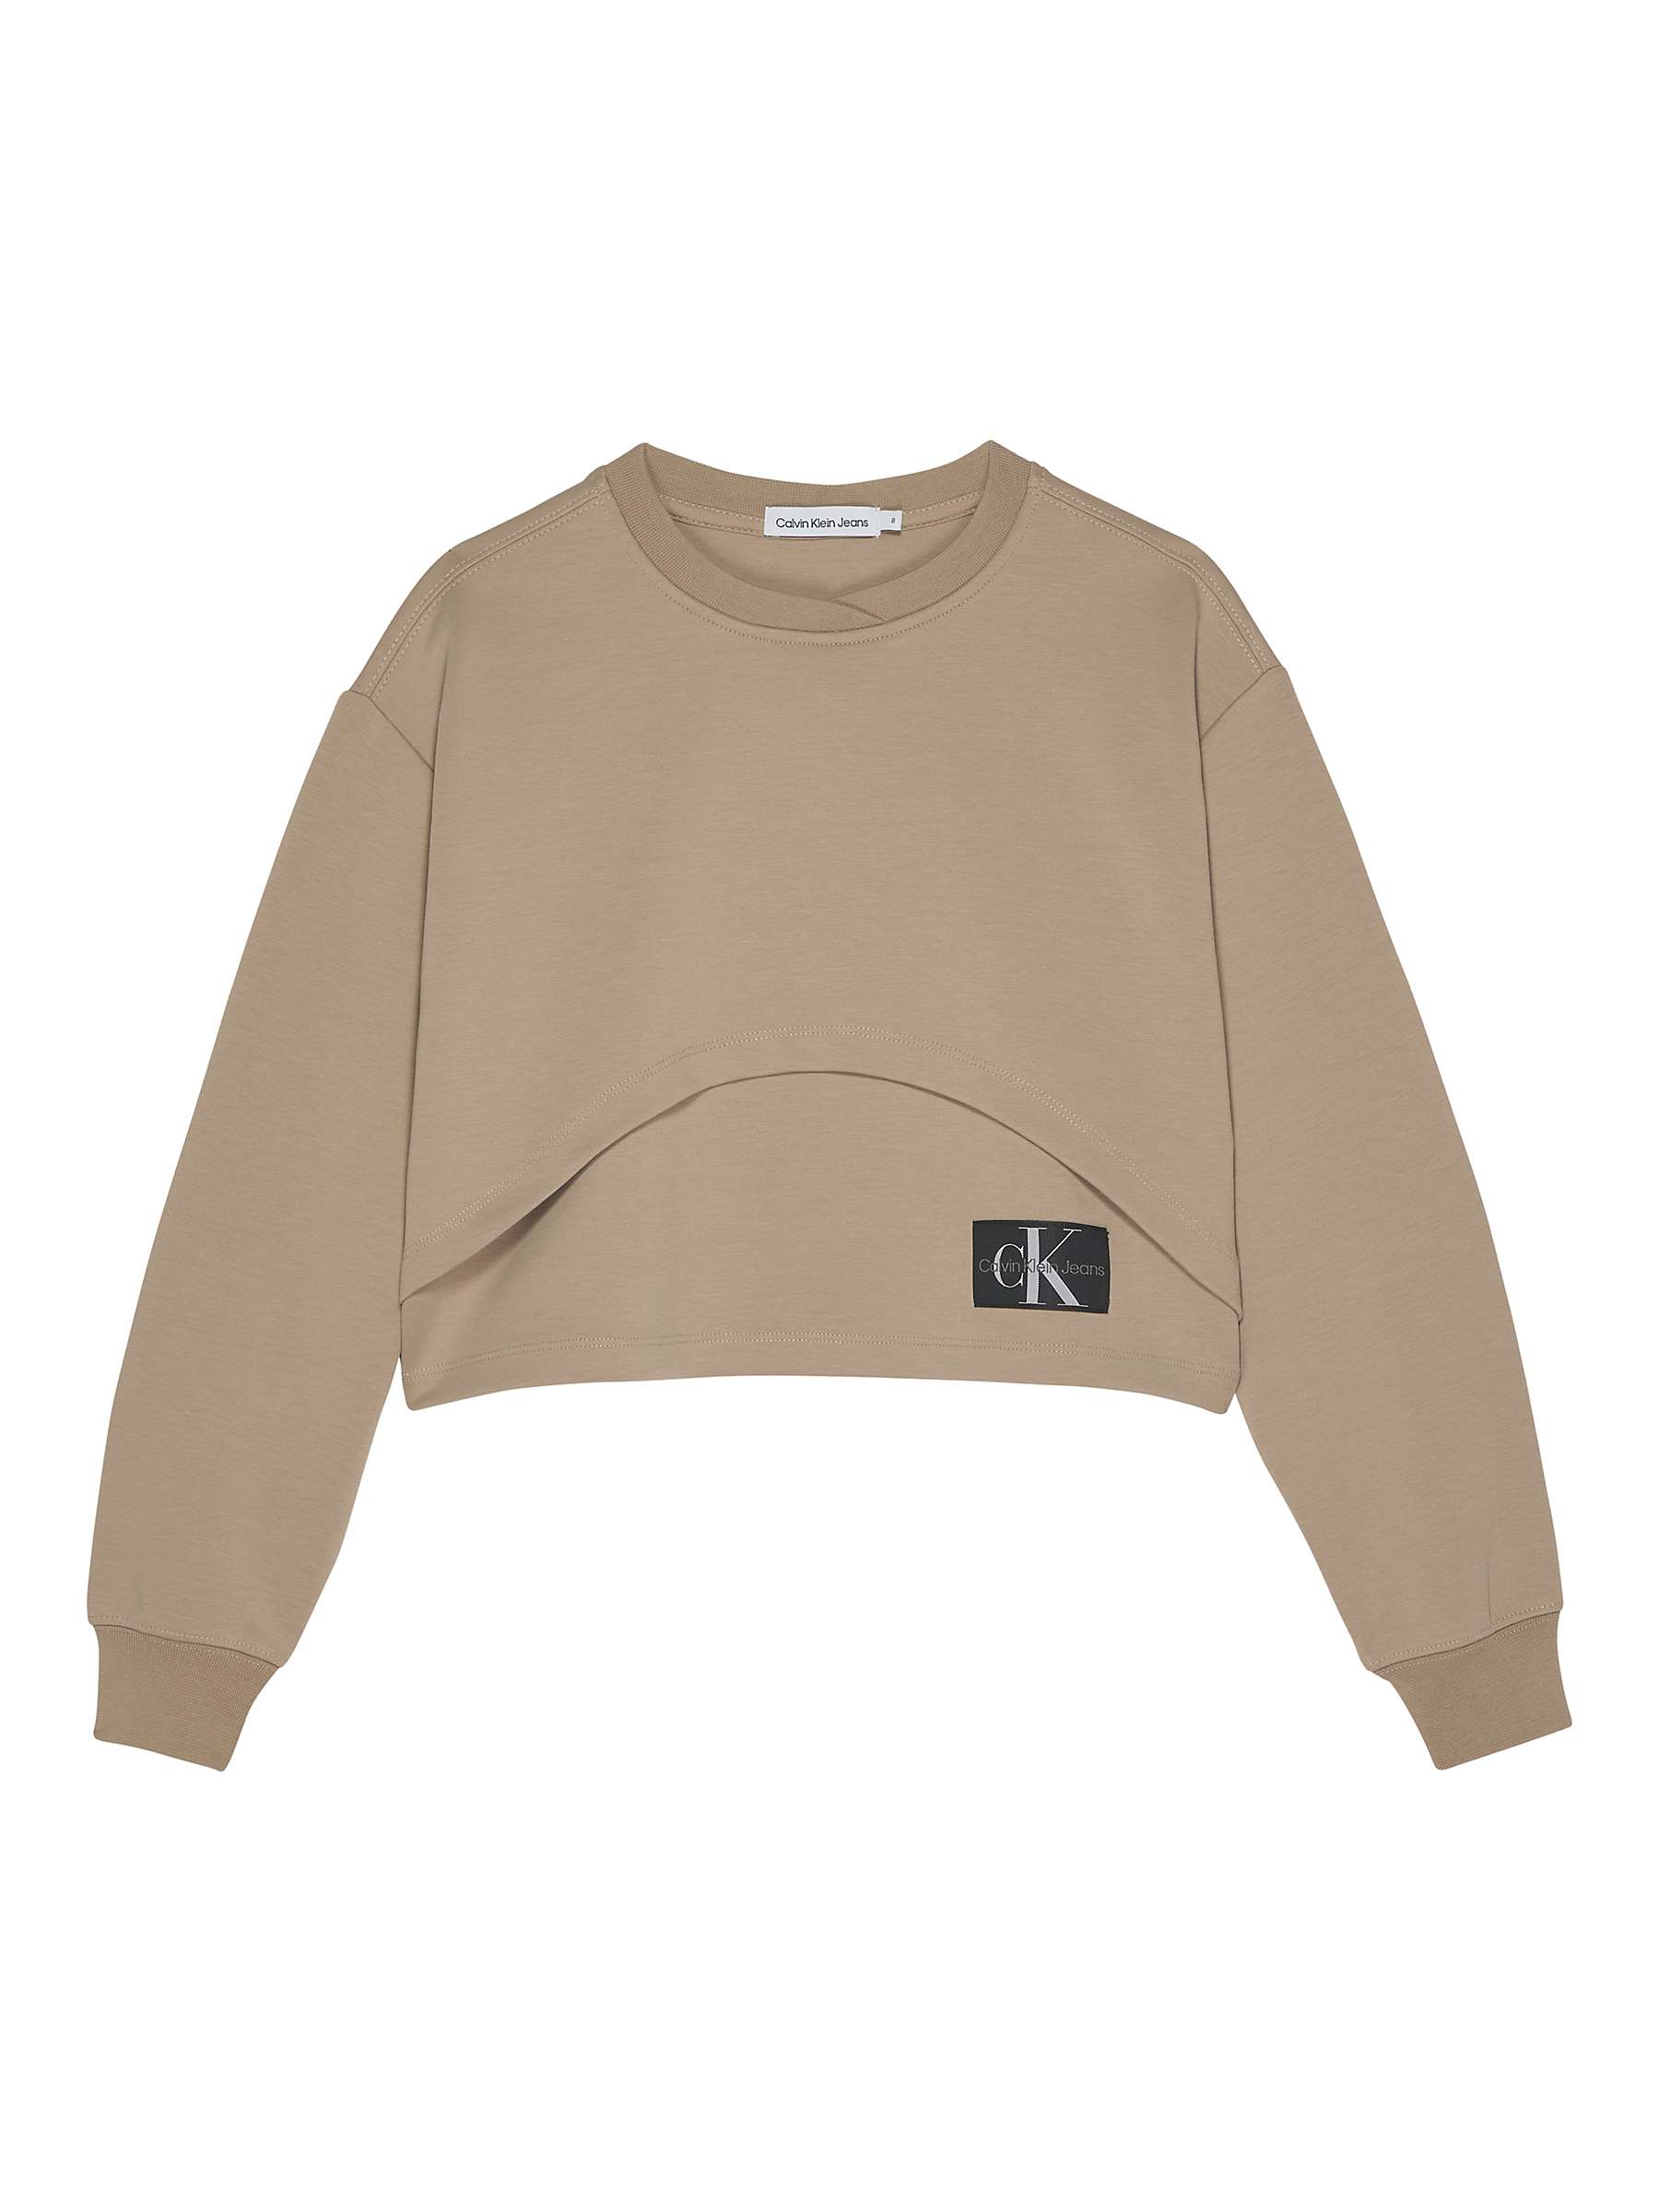 Buy Calvin Klein Kids' Play Curved Sweater, Travertine Online at johnlewis.com